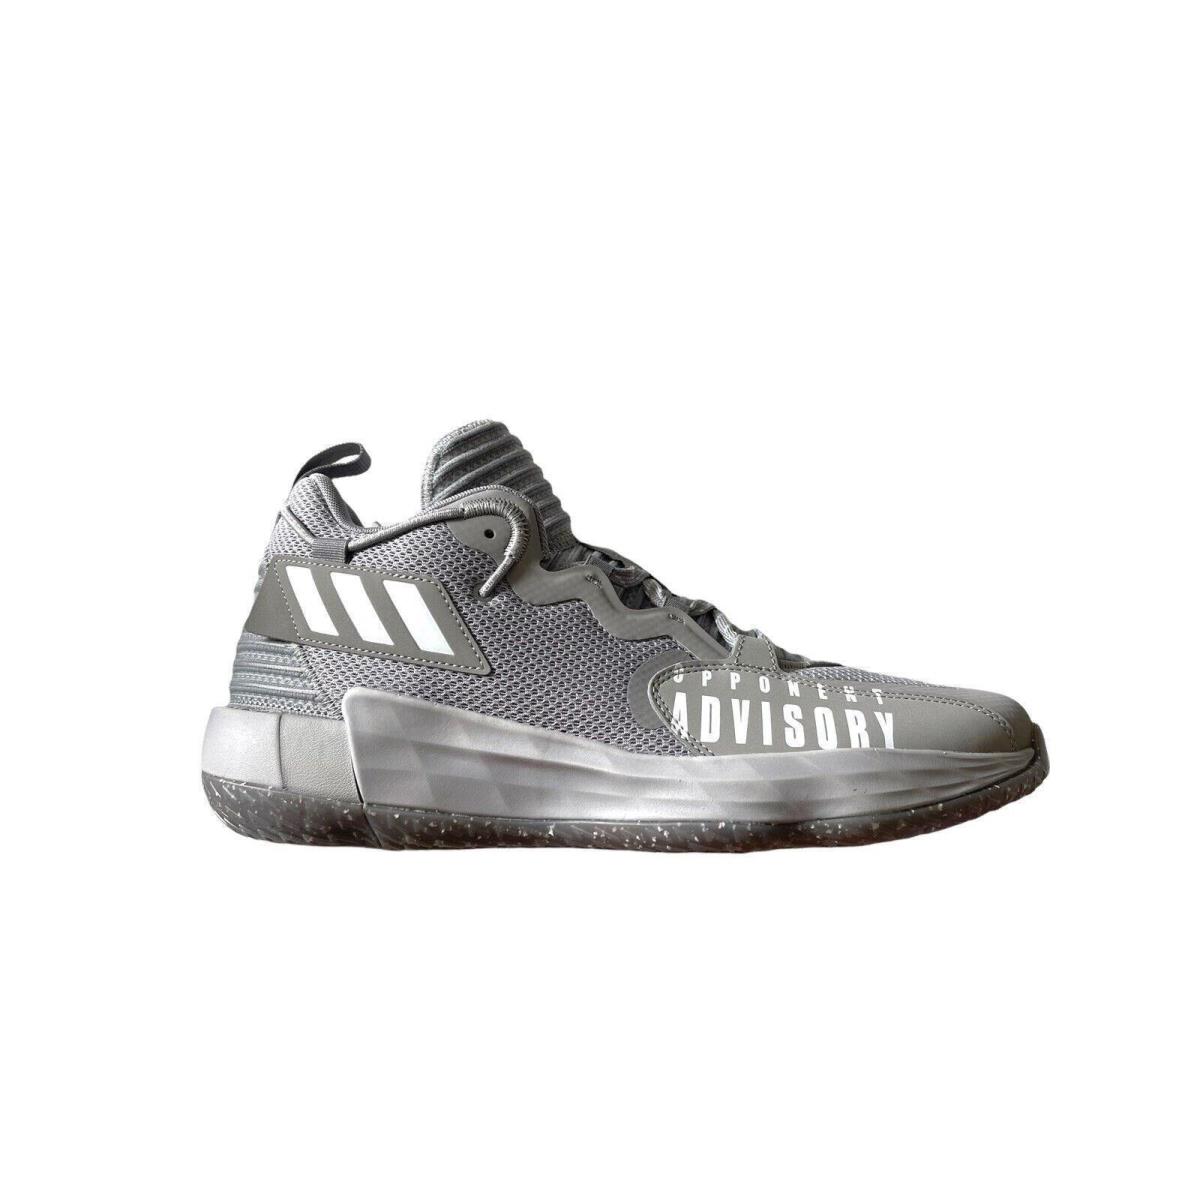 Adidas GW7904 SM Dame 7 Extply Gray Basketball Shoes Size 12.5 Damian Lillard